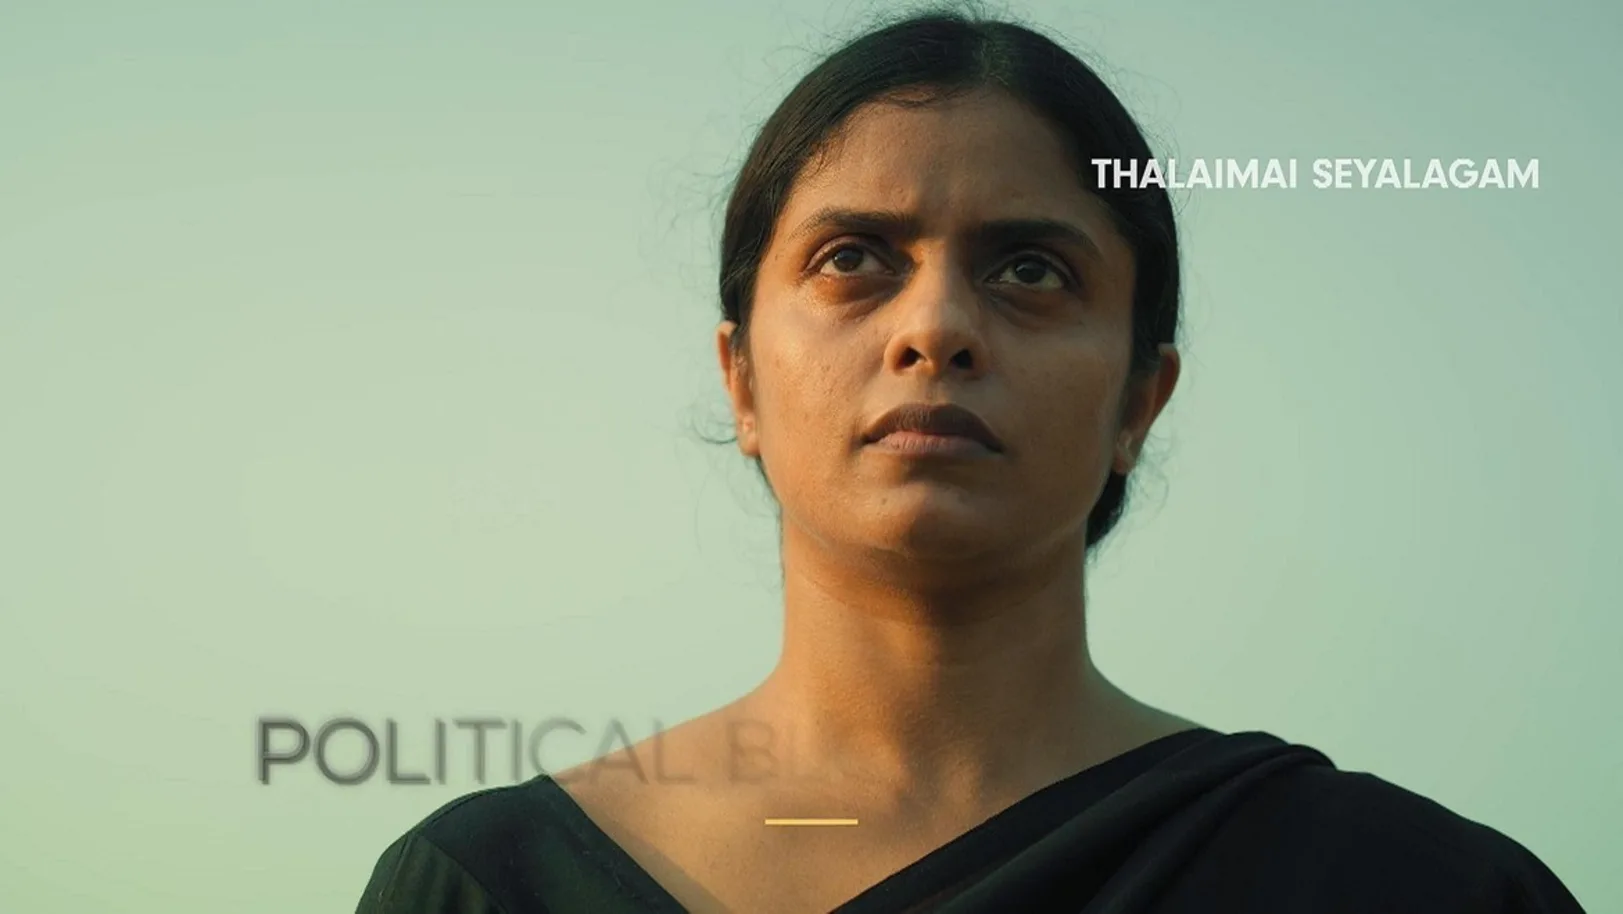 Thalaimai Seyalagam | A Political Blockbuster | Review Trailer